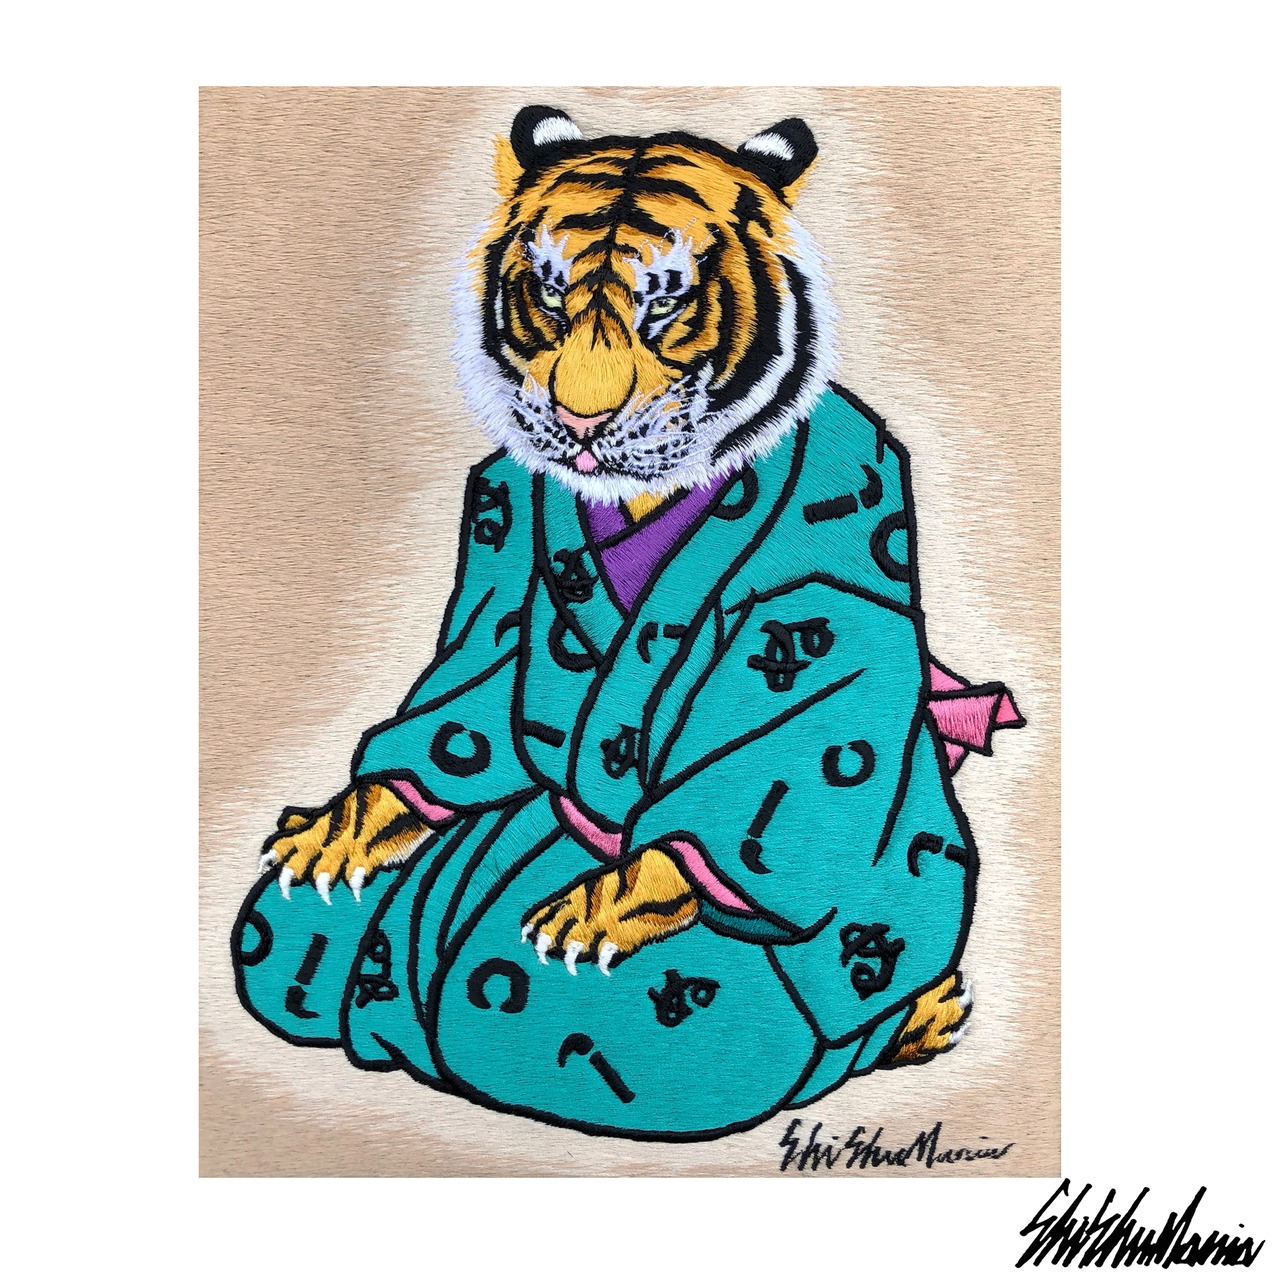 Tripping tiger刺繍パネル【横振り刺繍】